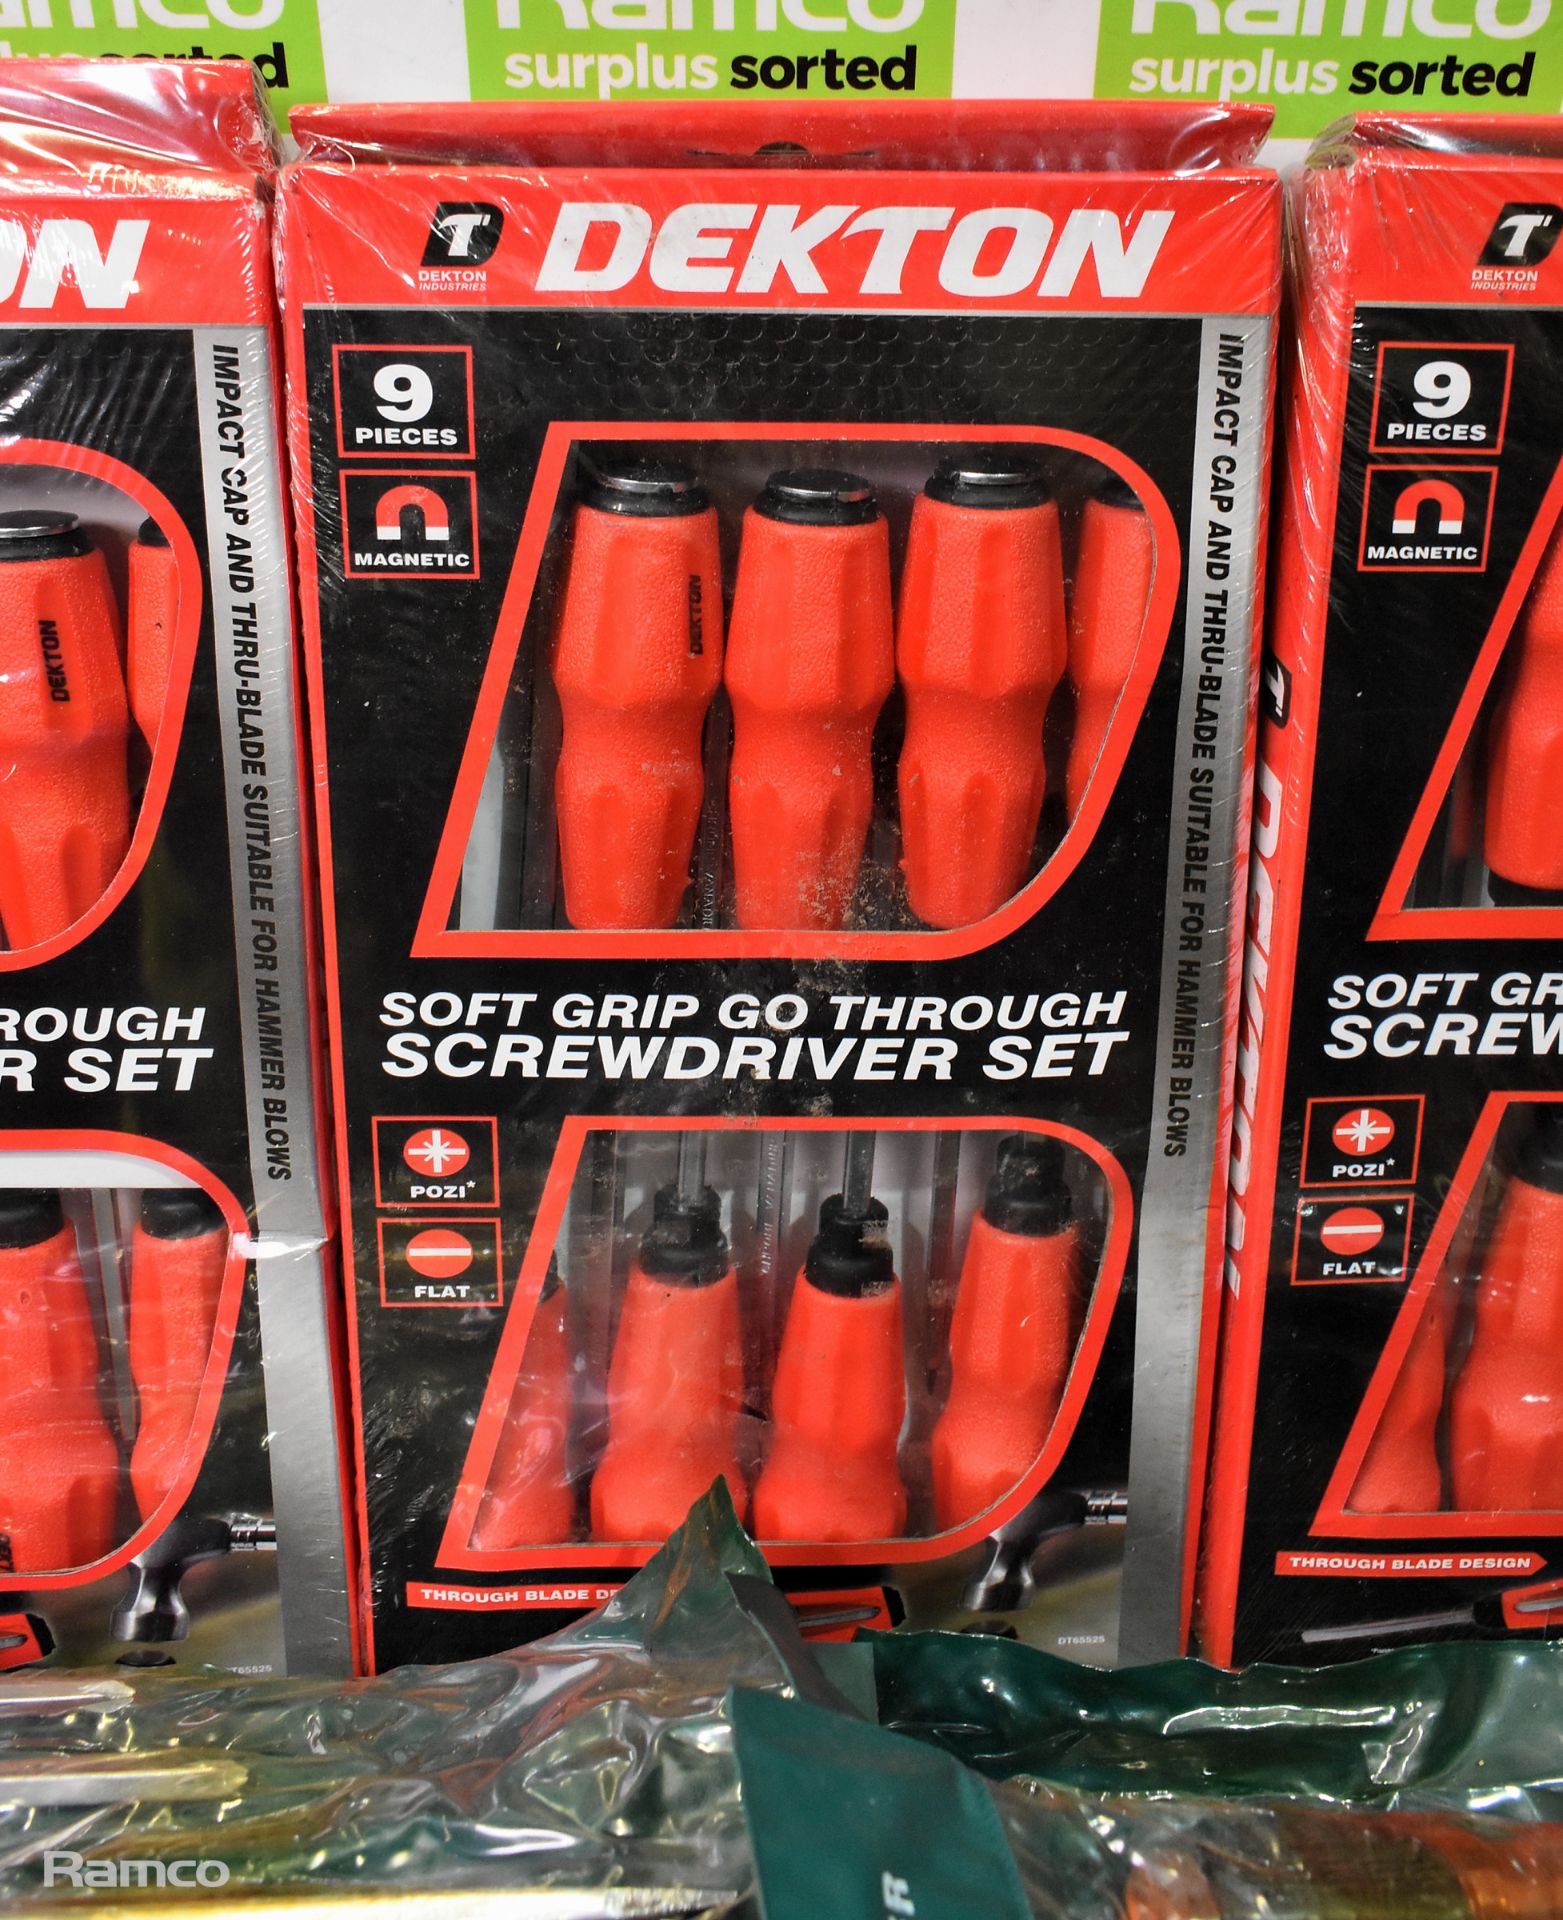 3x Dekton 9 piece soft grip go through screwdriver sets, 10x 6 piece screwdriver sets - Image 2 of 3